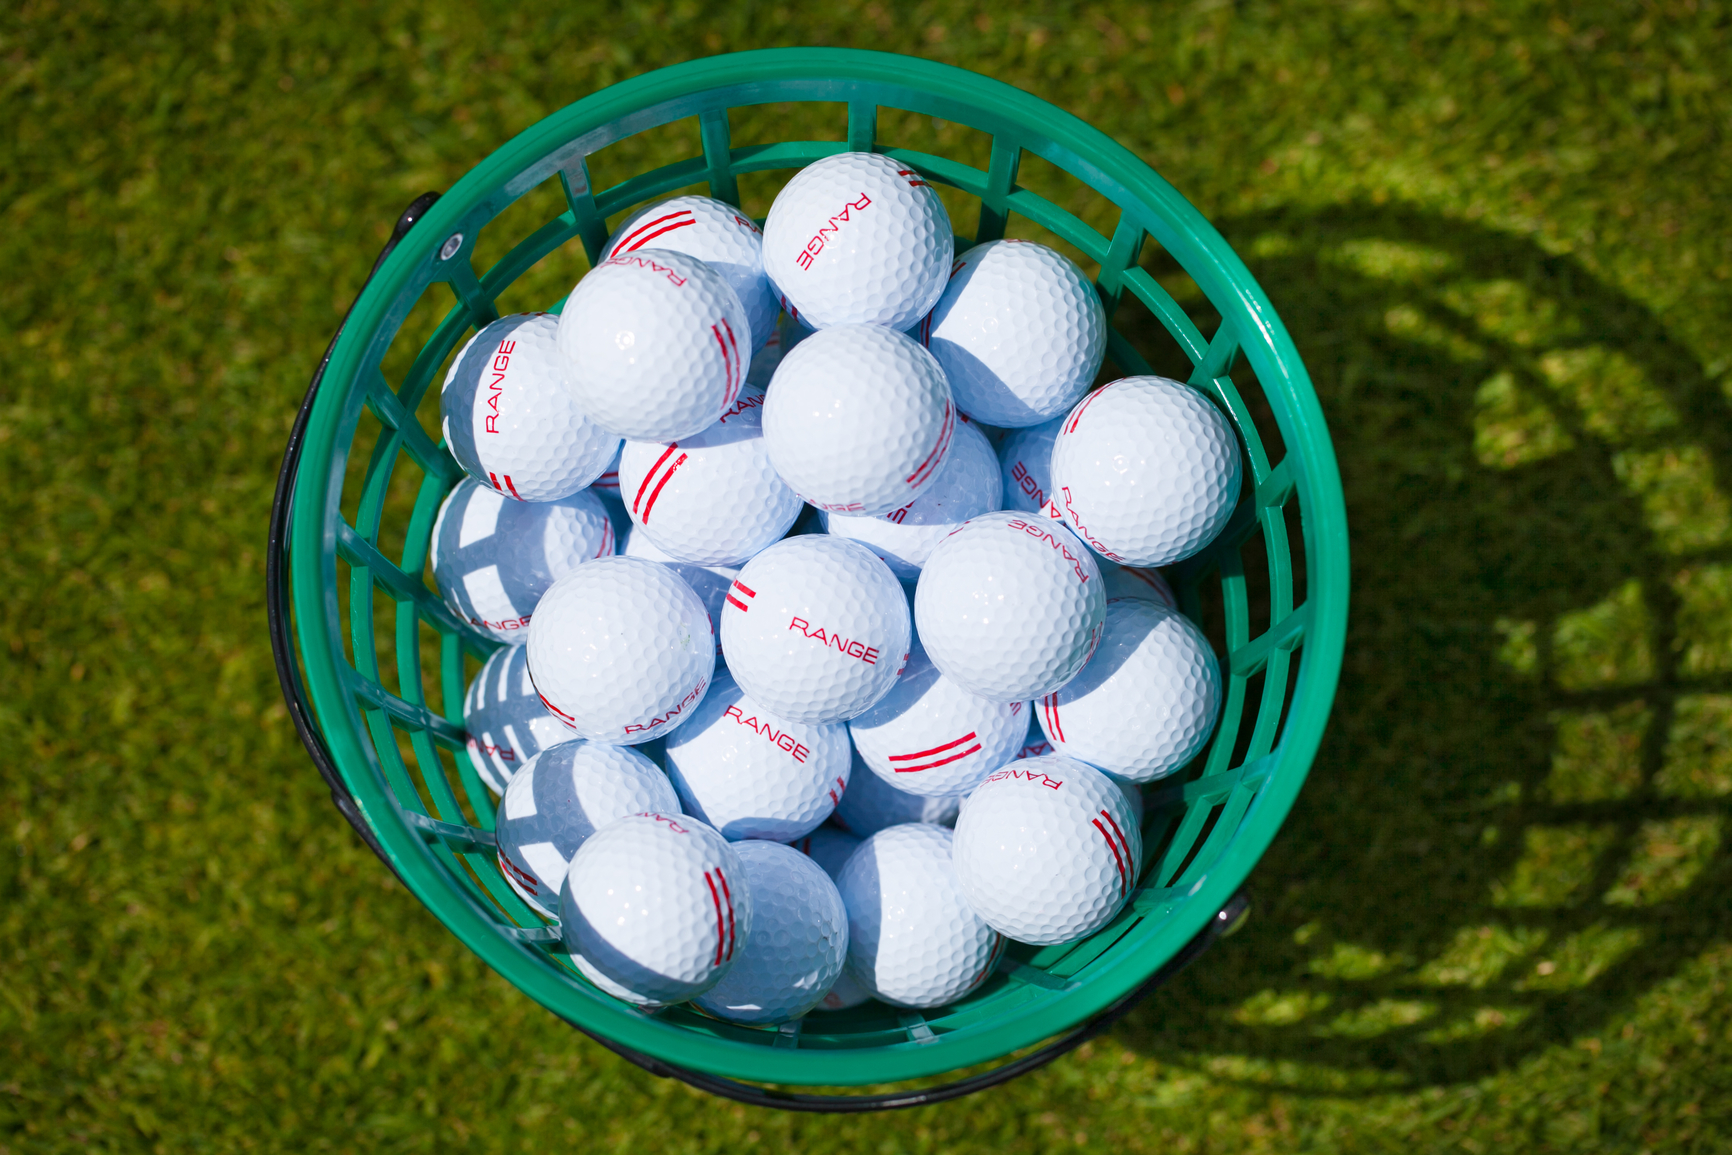 Golf balls bucket - King's Walk Golf Course | Grand Forks, ND